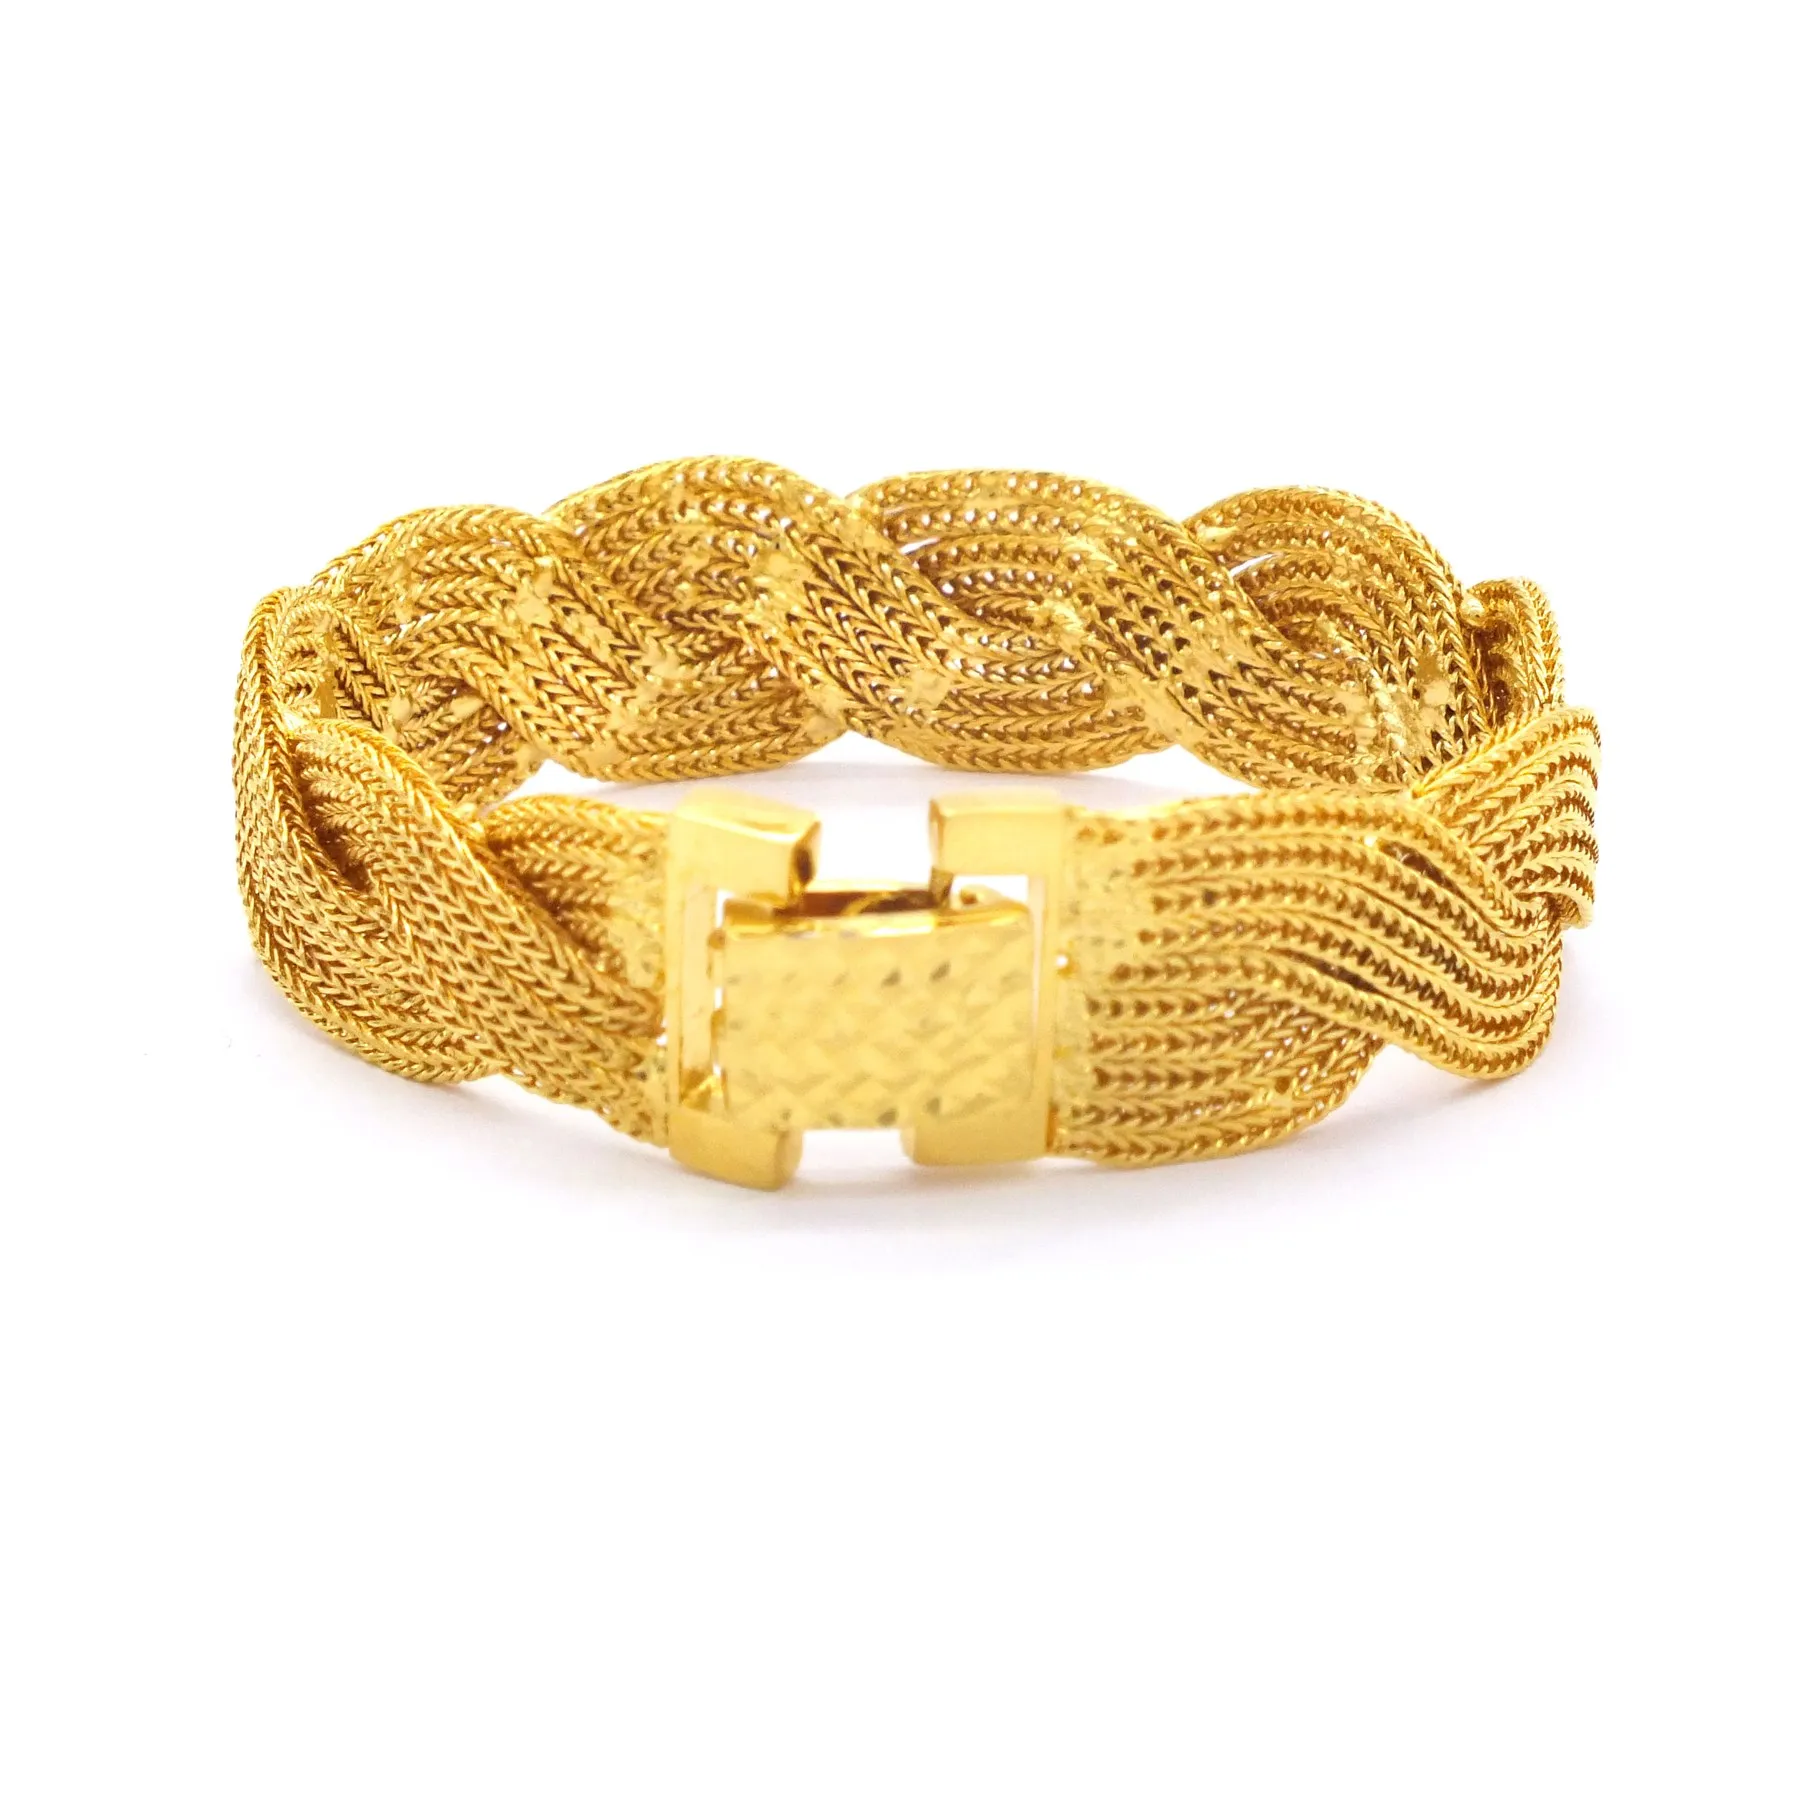 

GoldFashion 22 Carat Gold Plated Wicker Weave Cuff Bracelet Bangle Adjustable Cuff Vintage Stainless New Design Stylish Wrist Tr